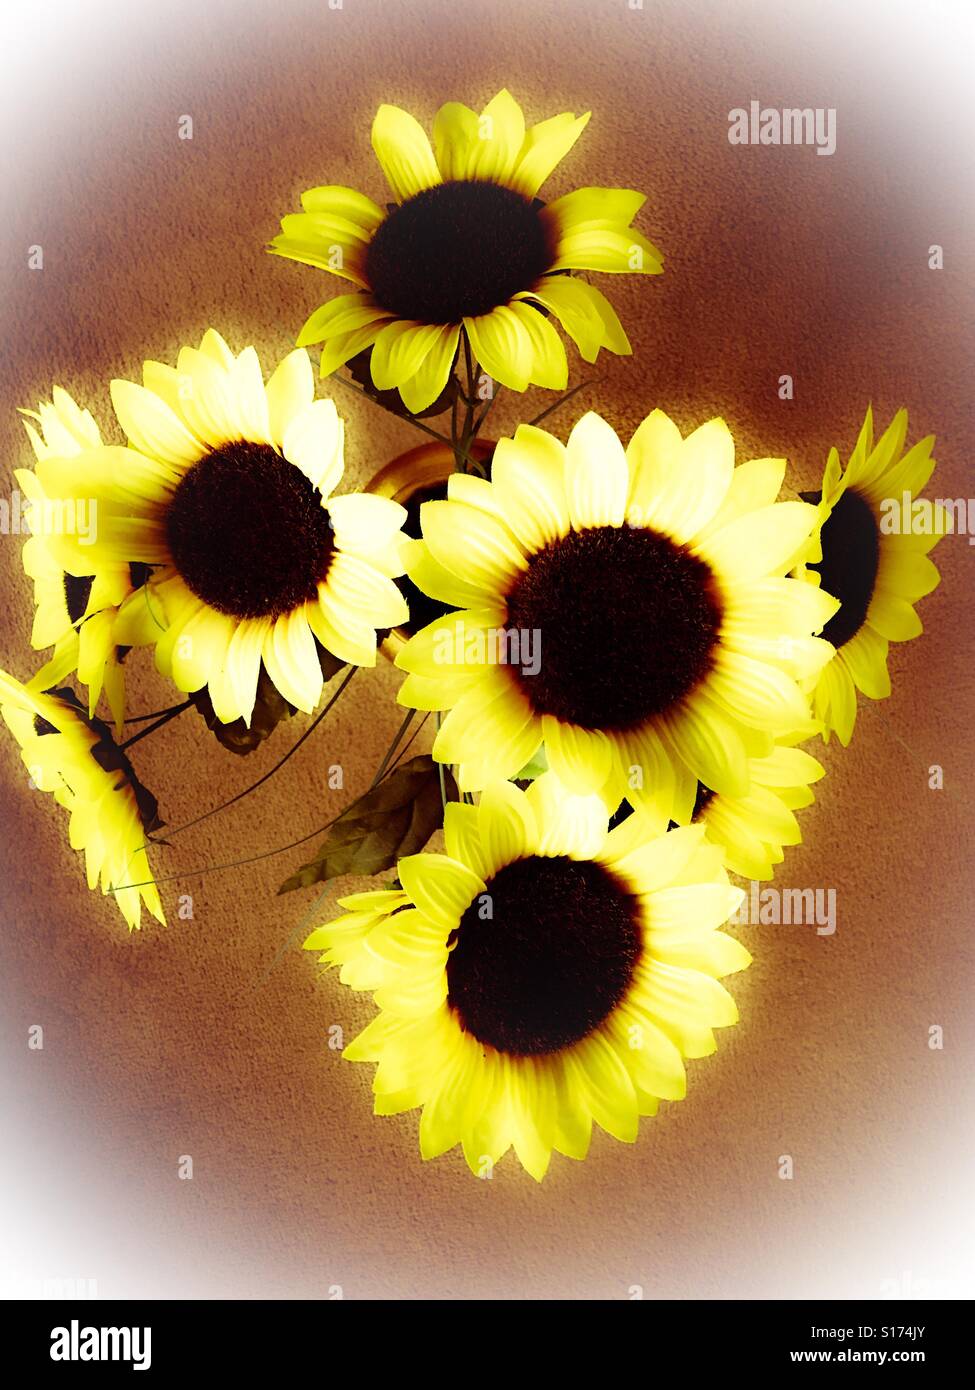 Glowing sunflowers Stock Photo